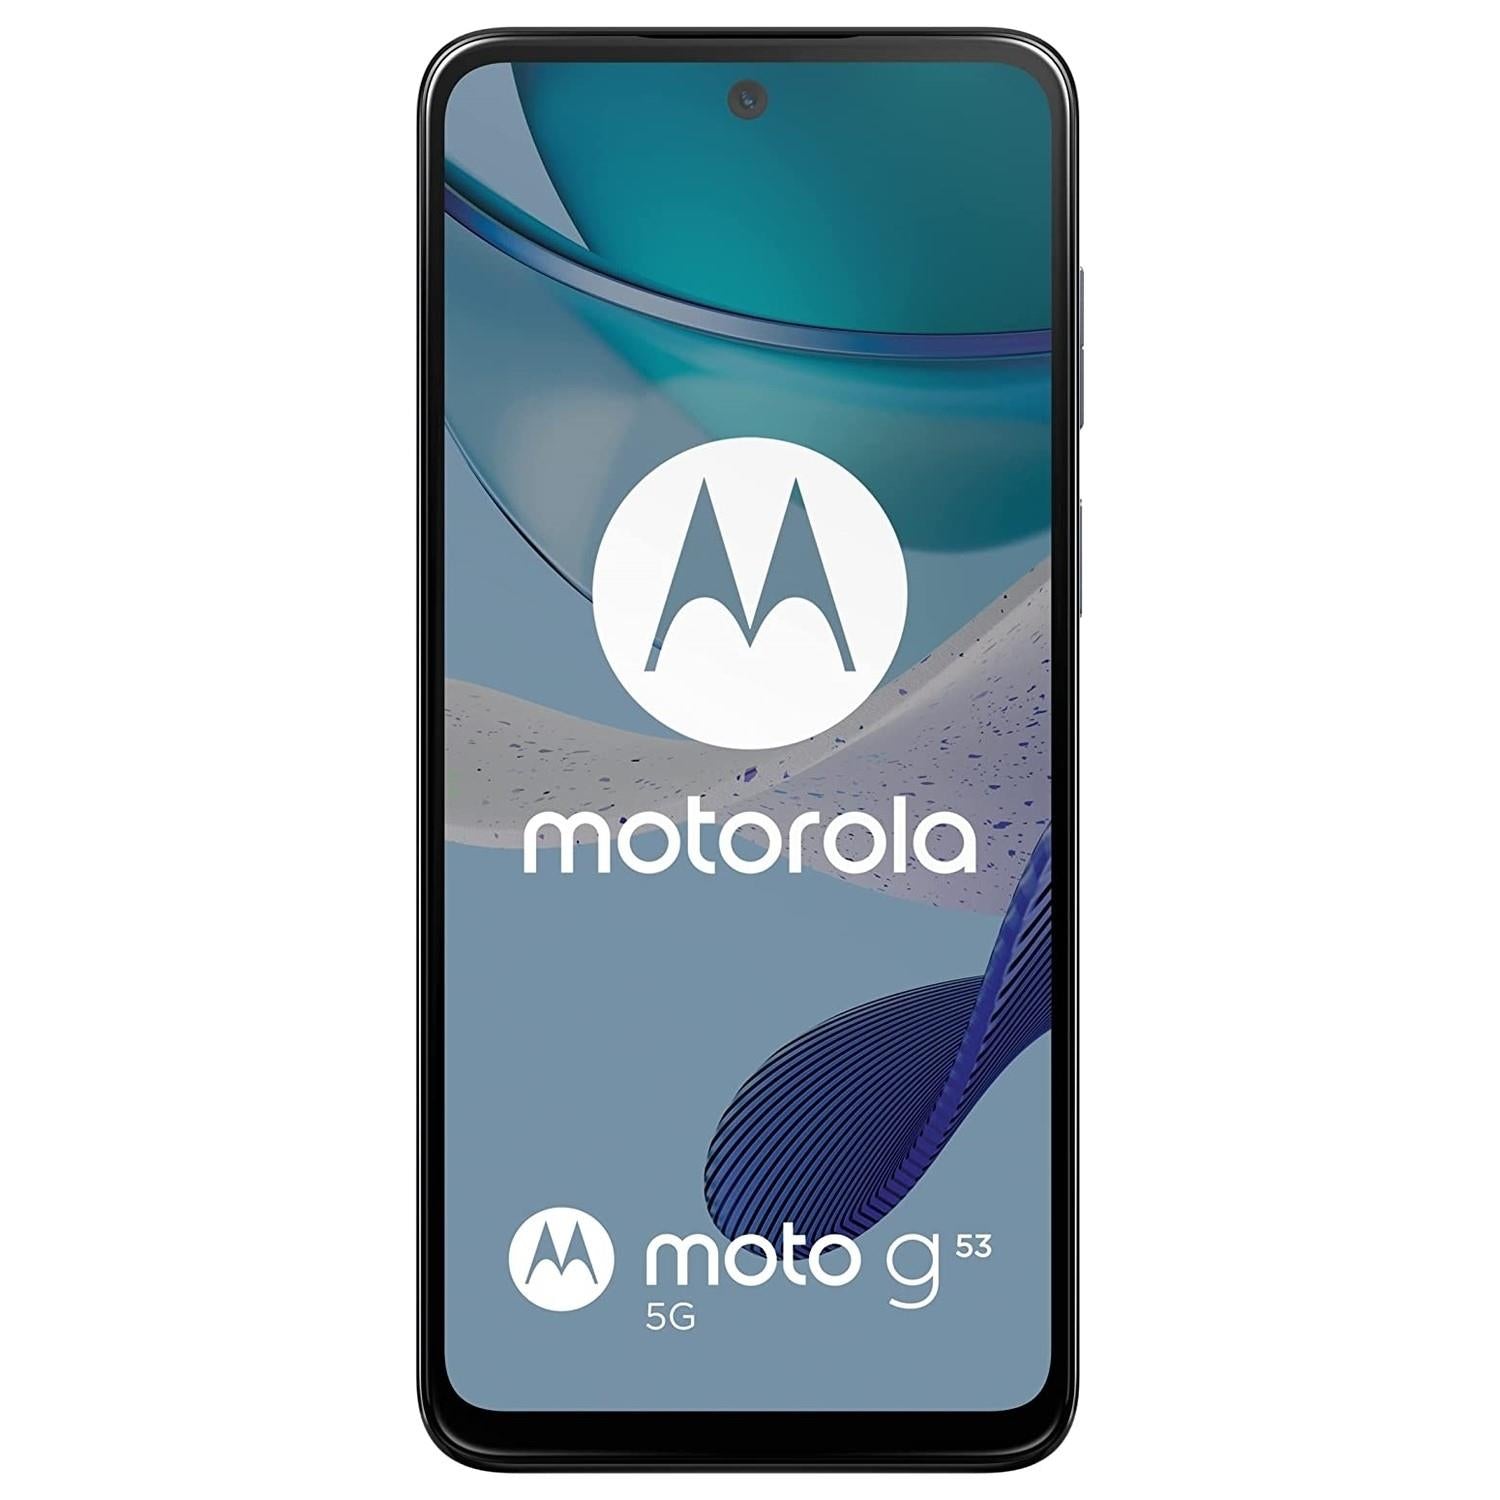 Motorola Moto G53 128GB 5G Silver Unlocked Sim Free Android Mobile Smartphone A